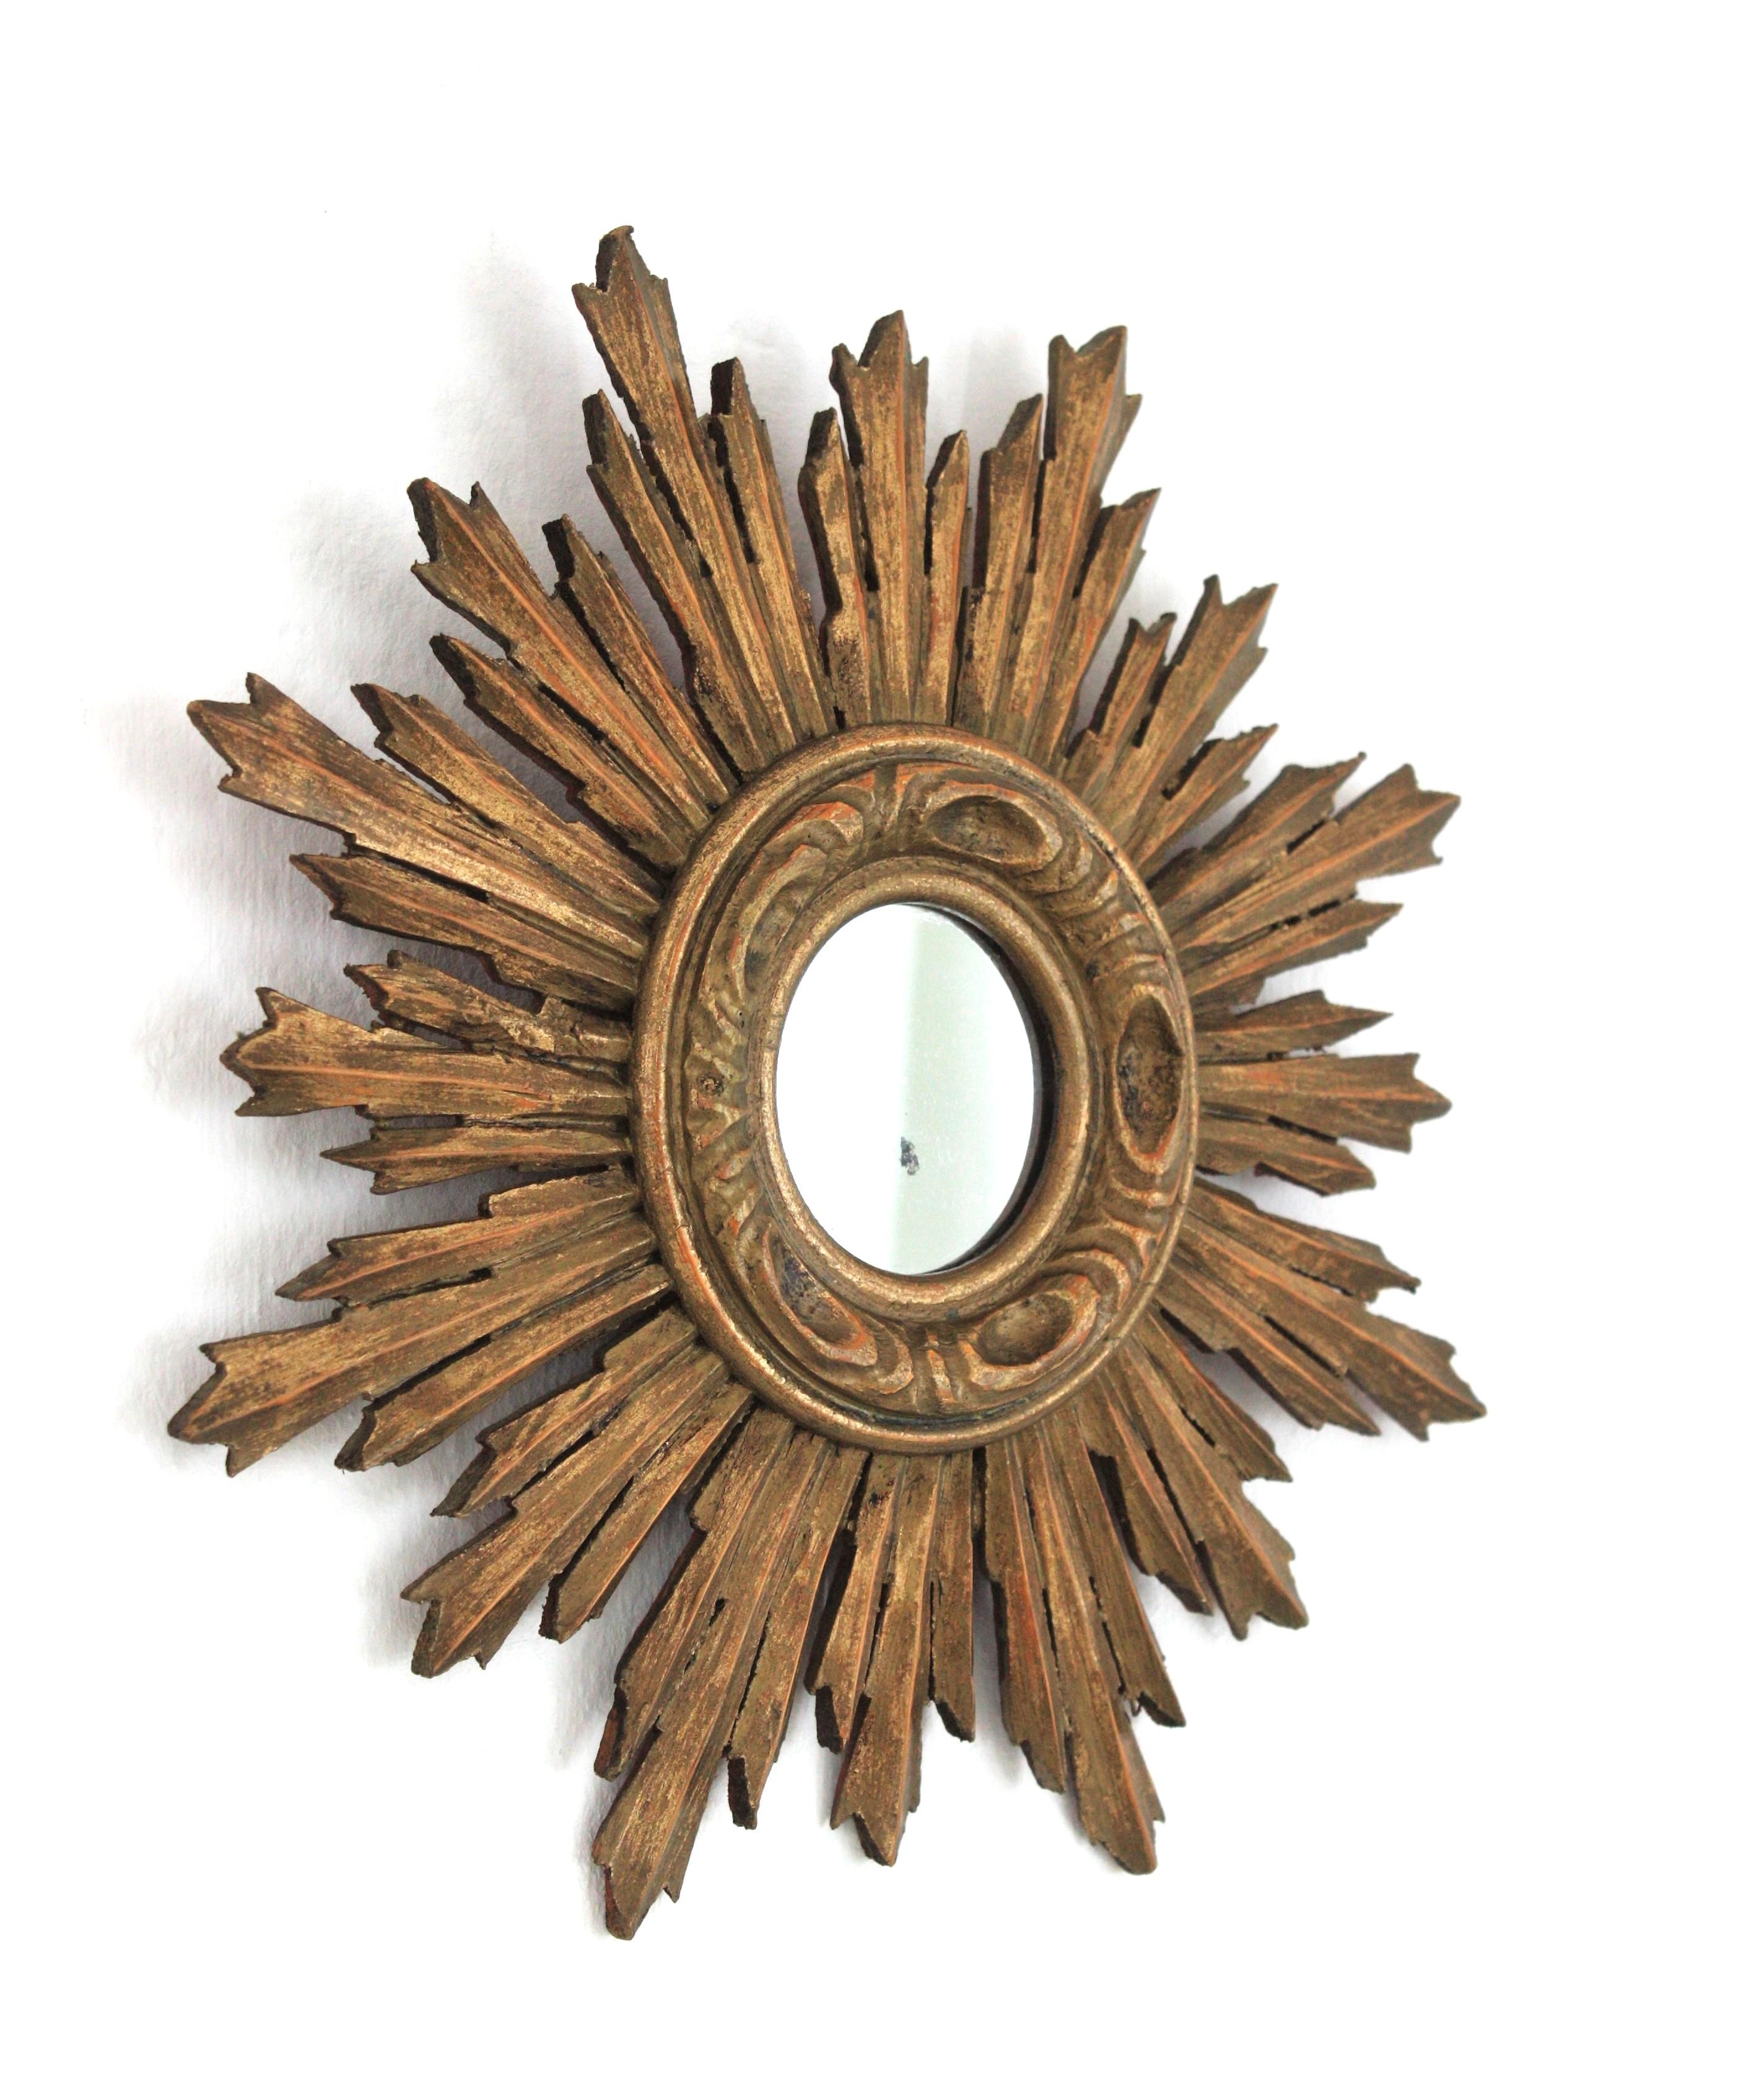 Sunburst Giltwood Mirror in Small Scale, Spanish Baroque  For Sale 8